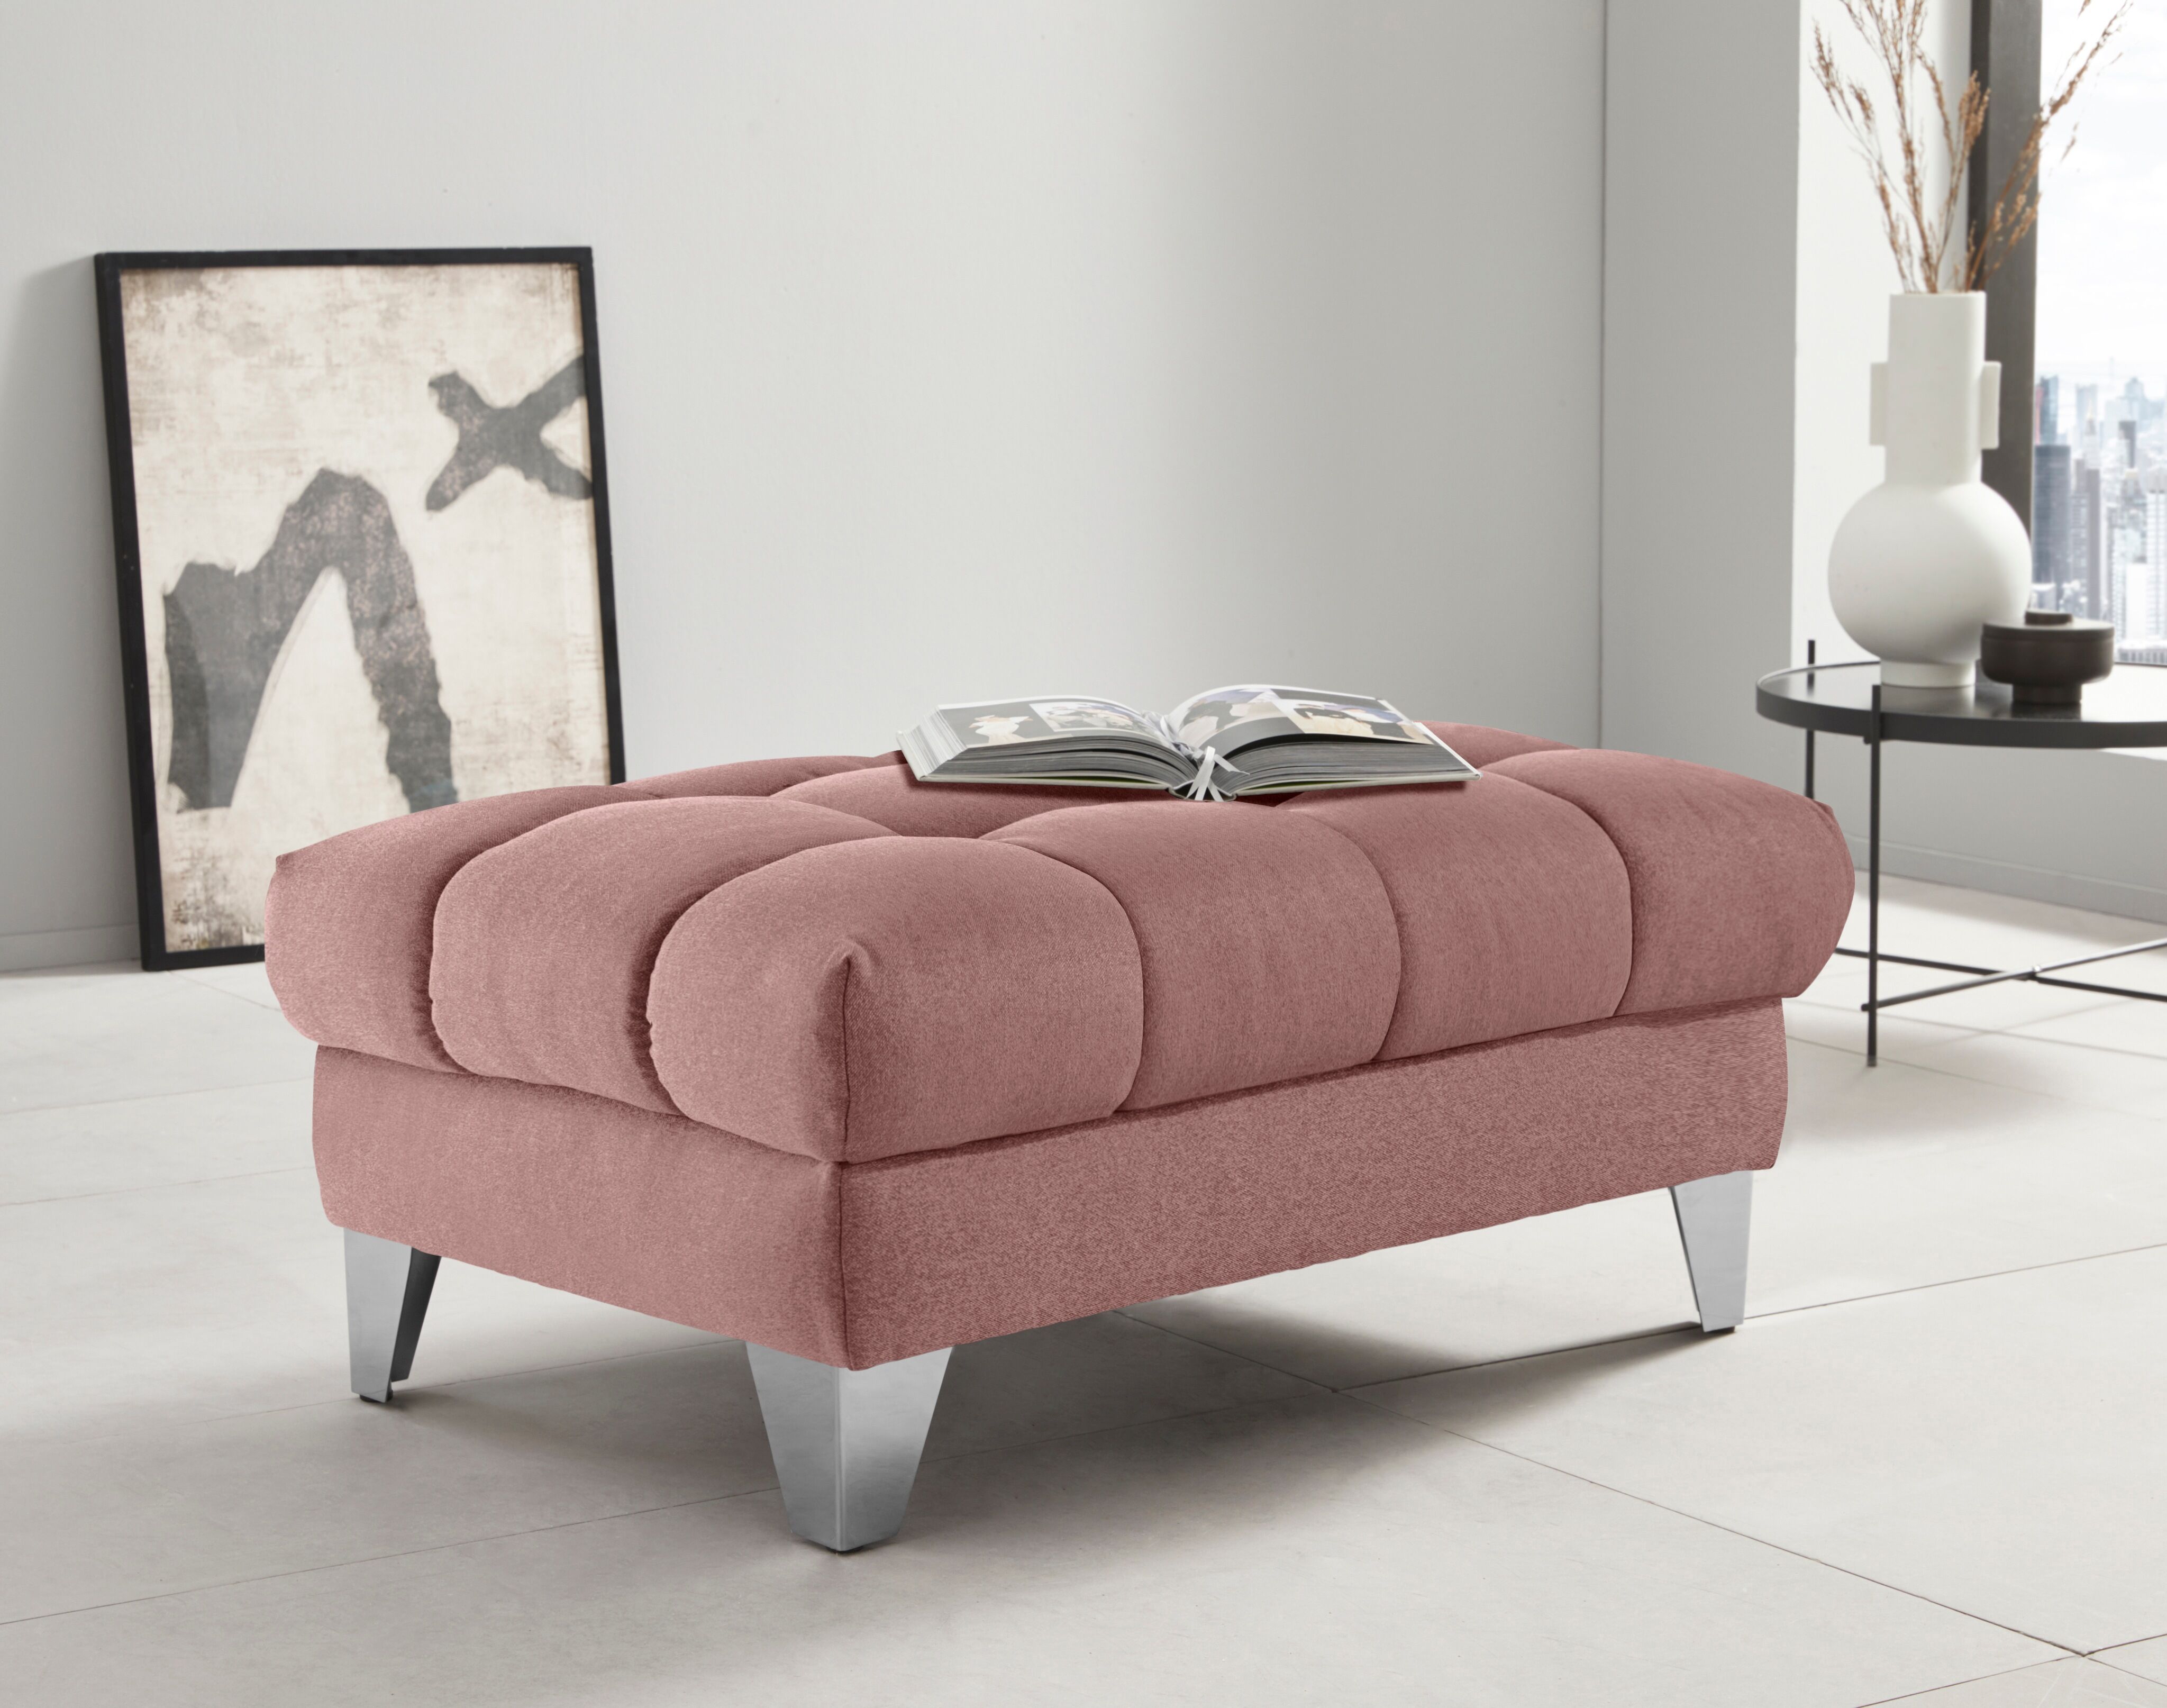 Places of Style Hockerbank »Bardi Luxus«, belastbar bis 140kg, wahlweise mit... rosa